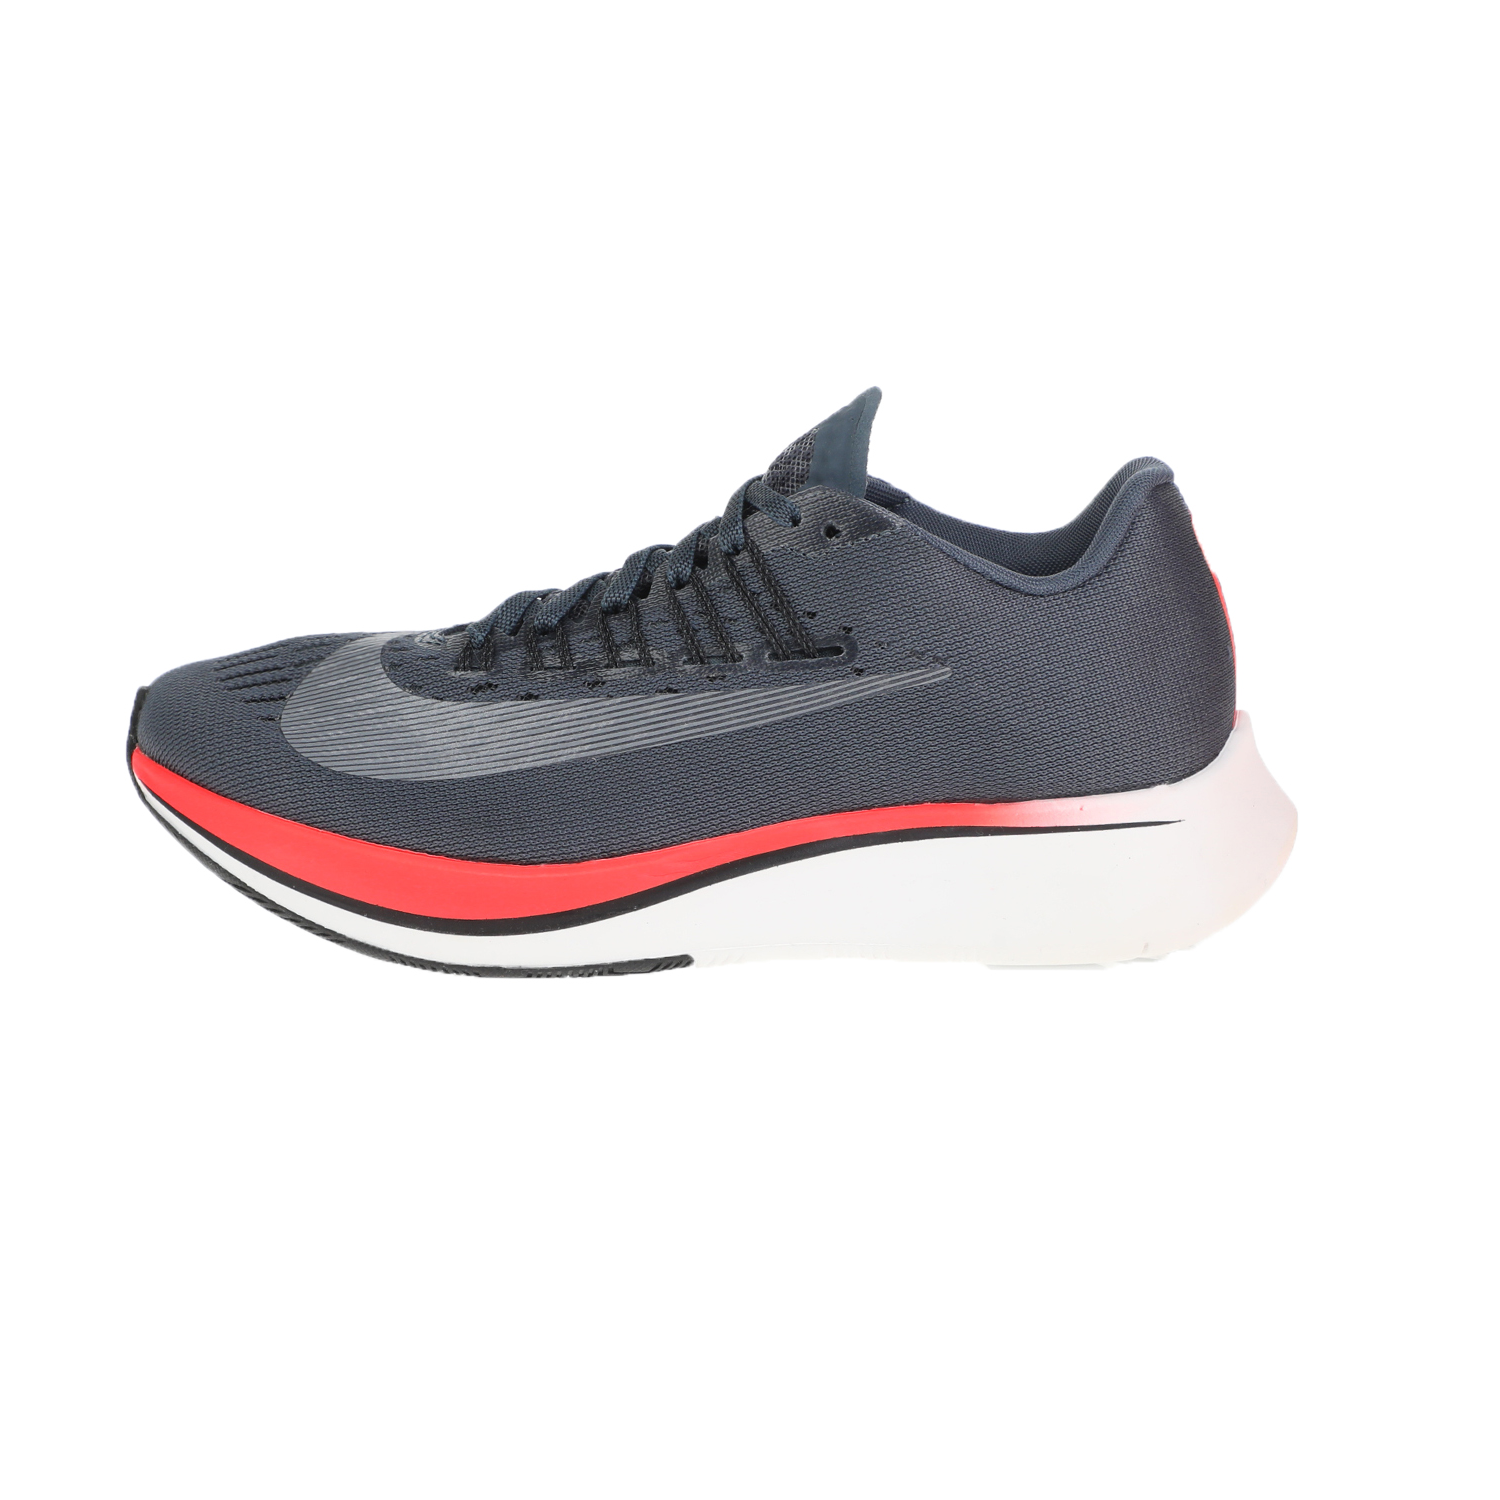 NIKE - Γυναικεία αθλητικά παπούτσια NIKE ZOOM FLY ΥΠΟΔΗΜΑ μπλε Γυναικεία/Παπούτσια/Αθλητικά/Running